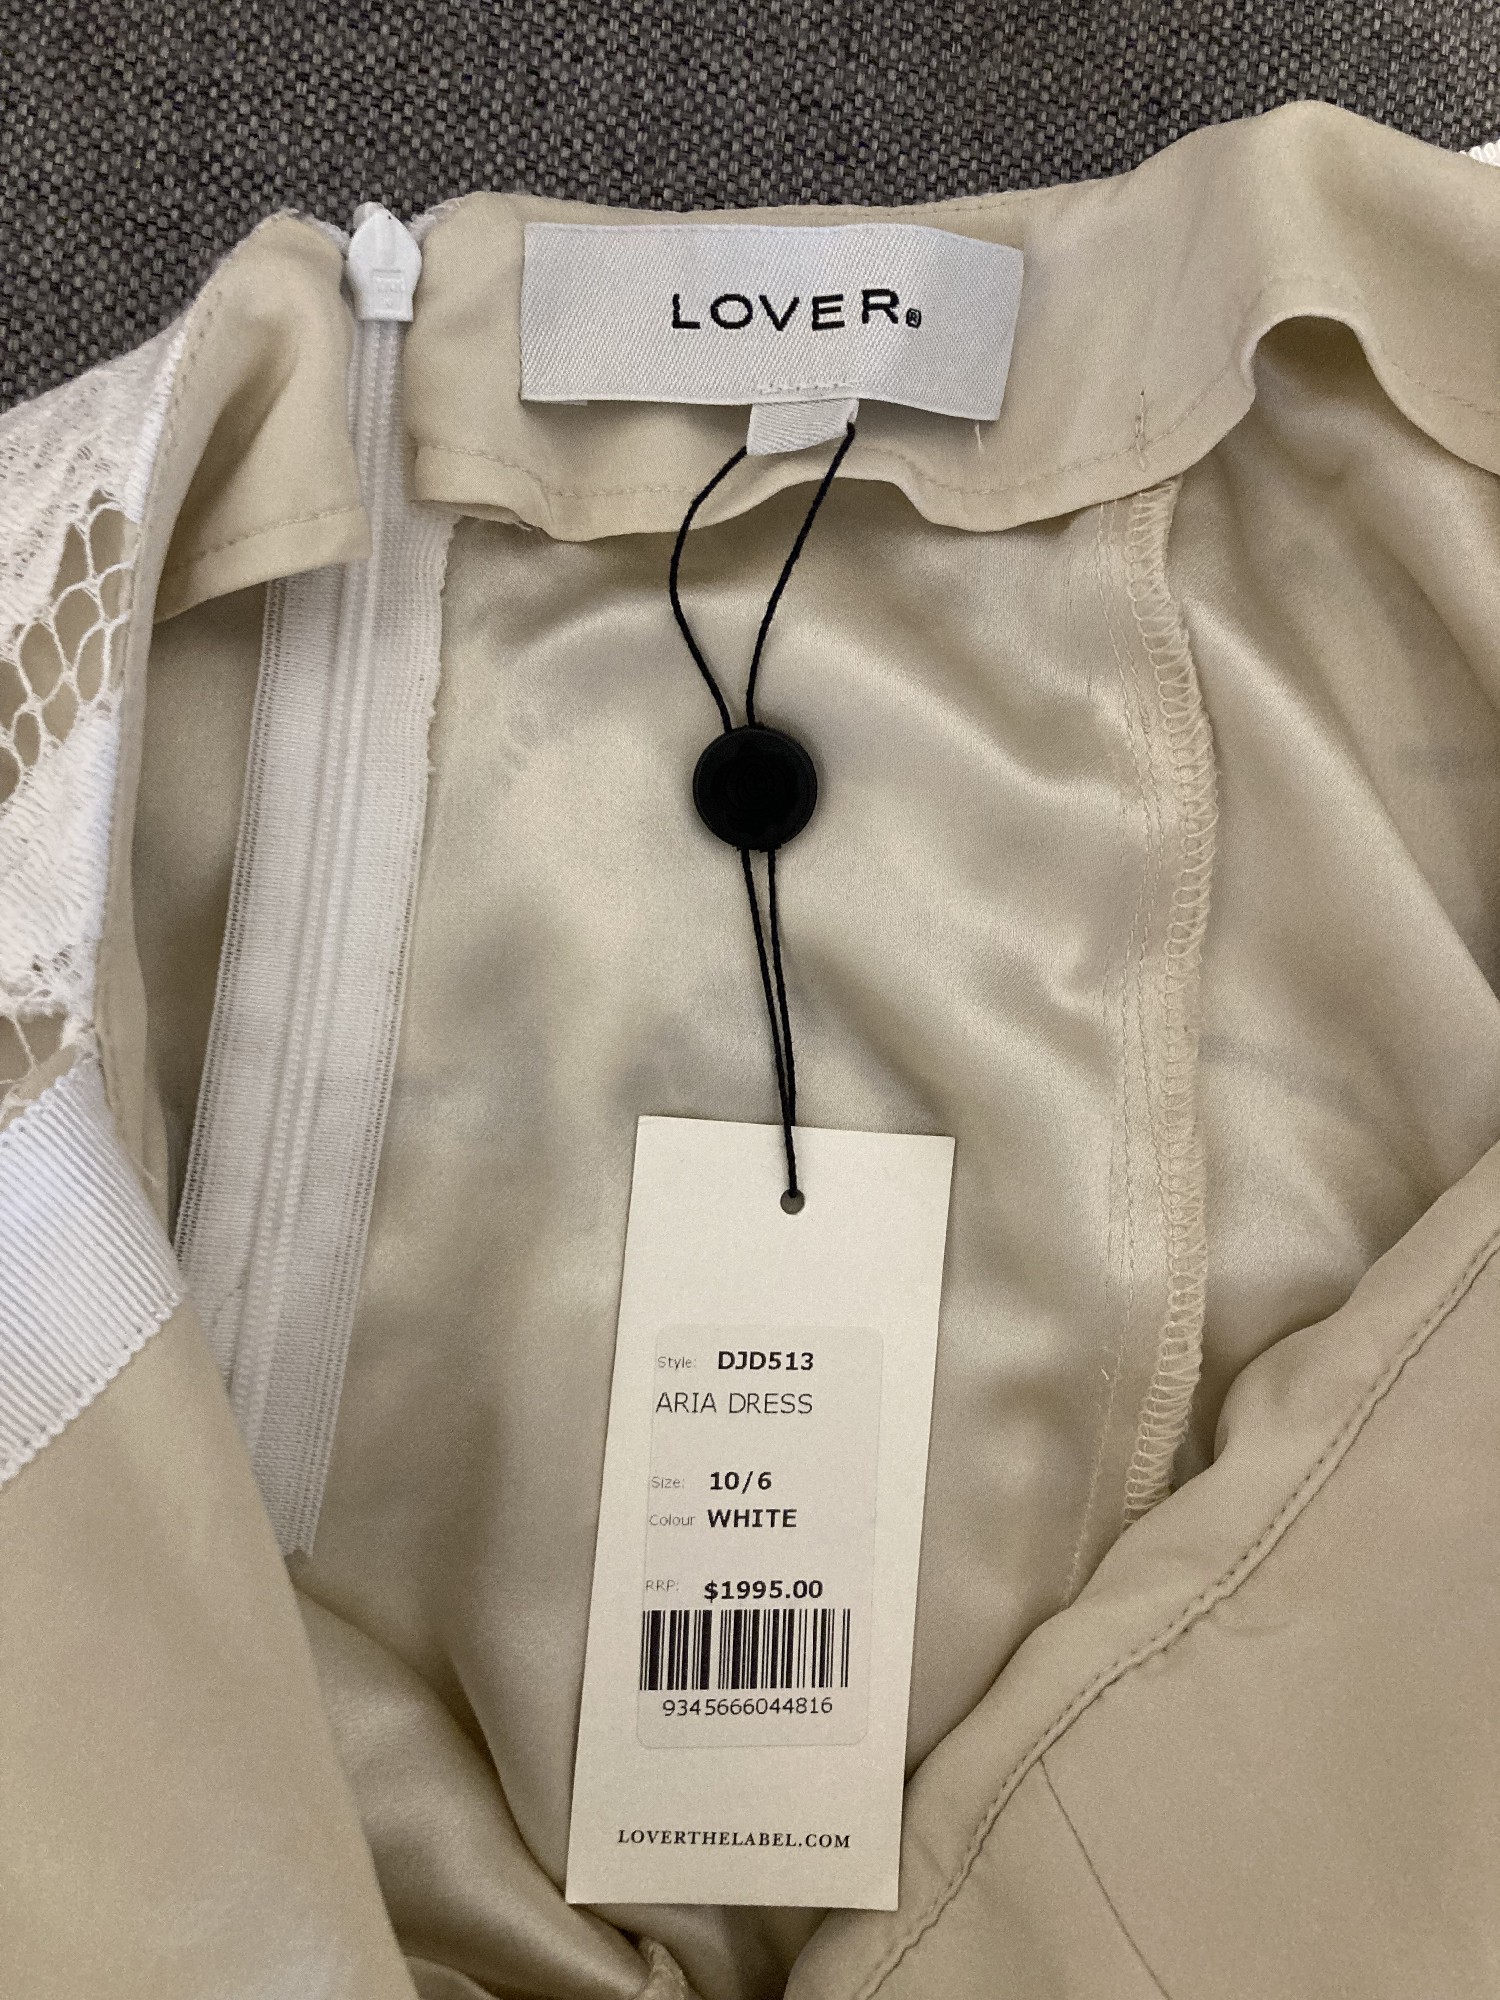 Lover The Label Nova / Aria New Wedding Dress Save 69% - Stillwhite